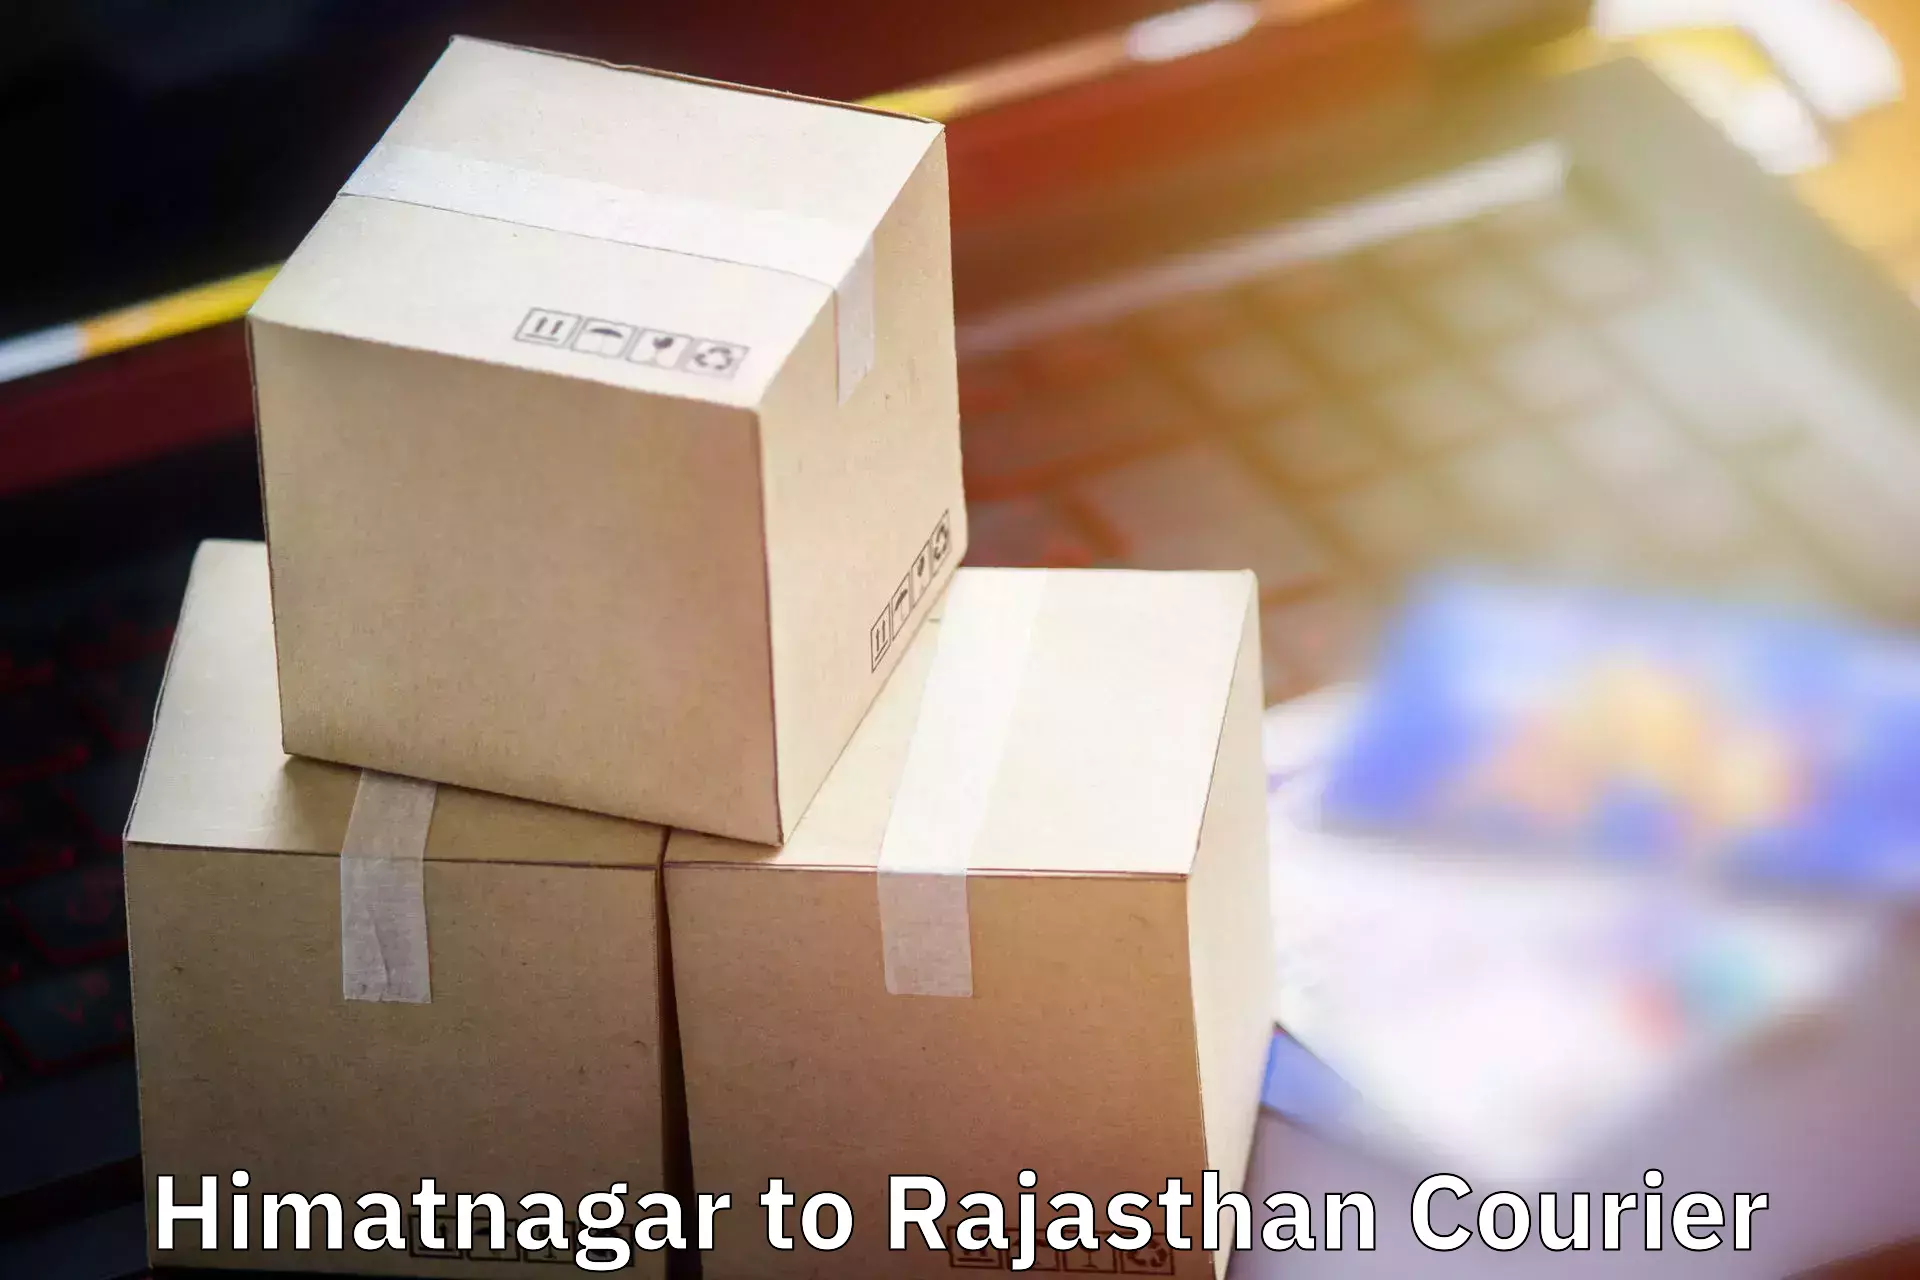 Luggage delivery network Himatnagar to Shrimadhopur